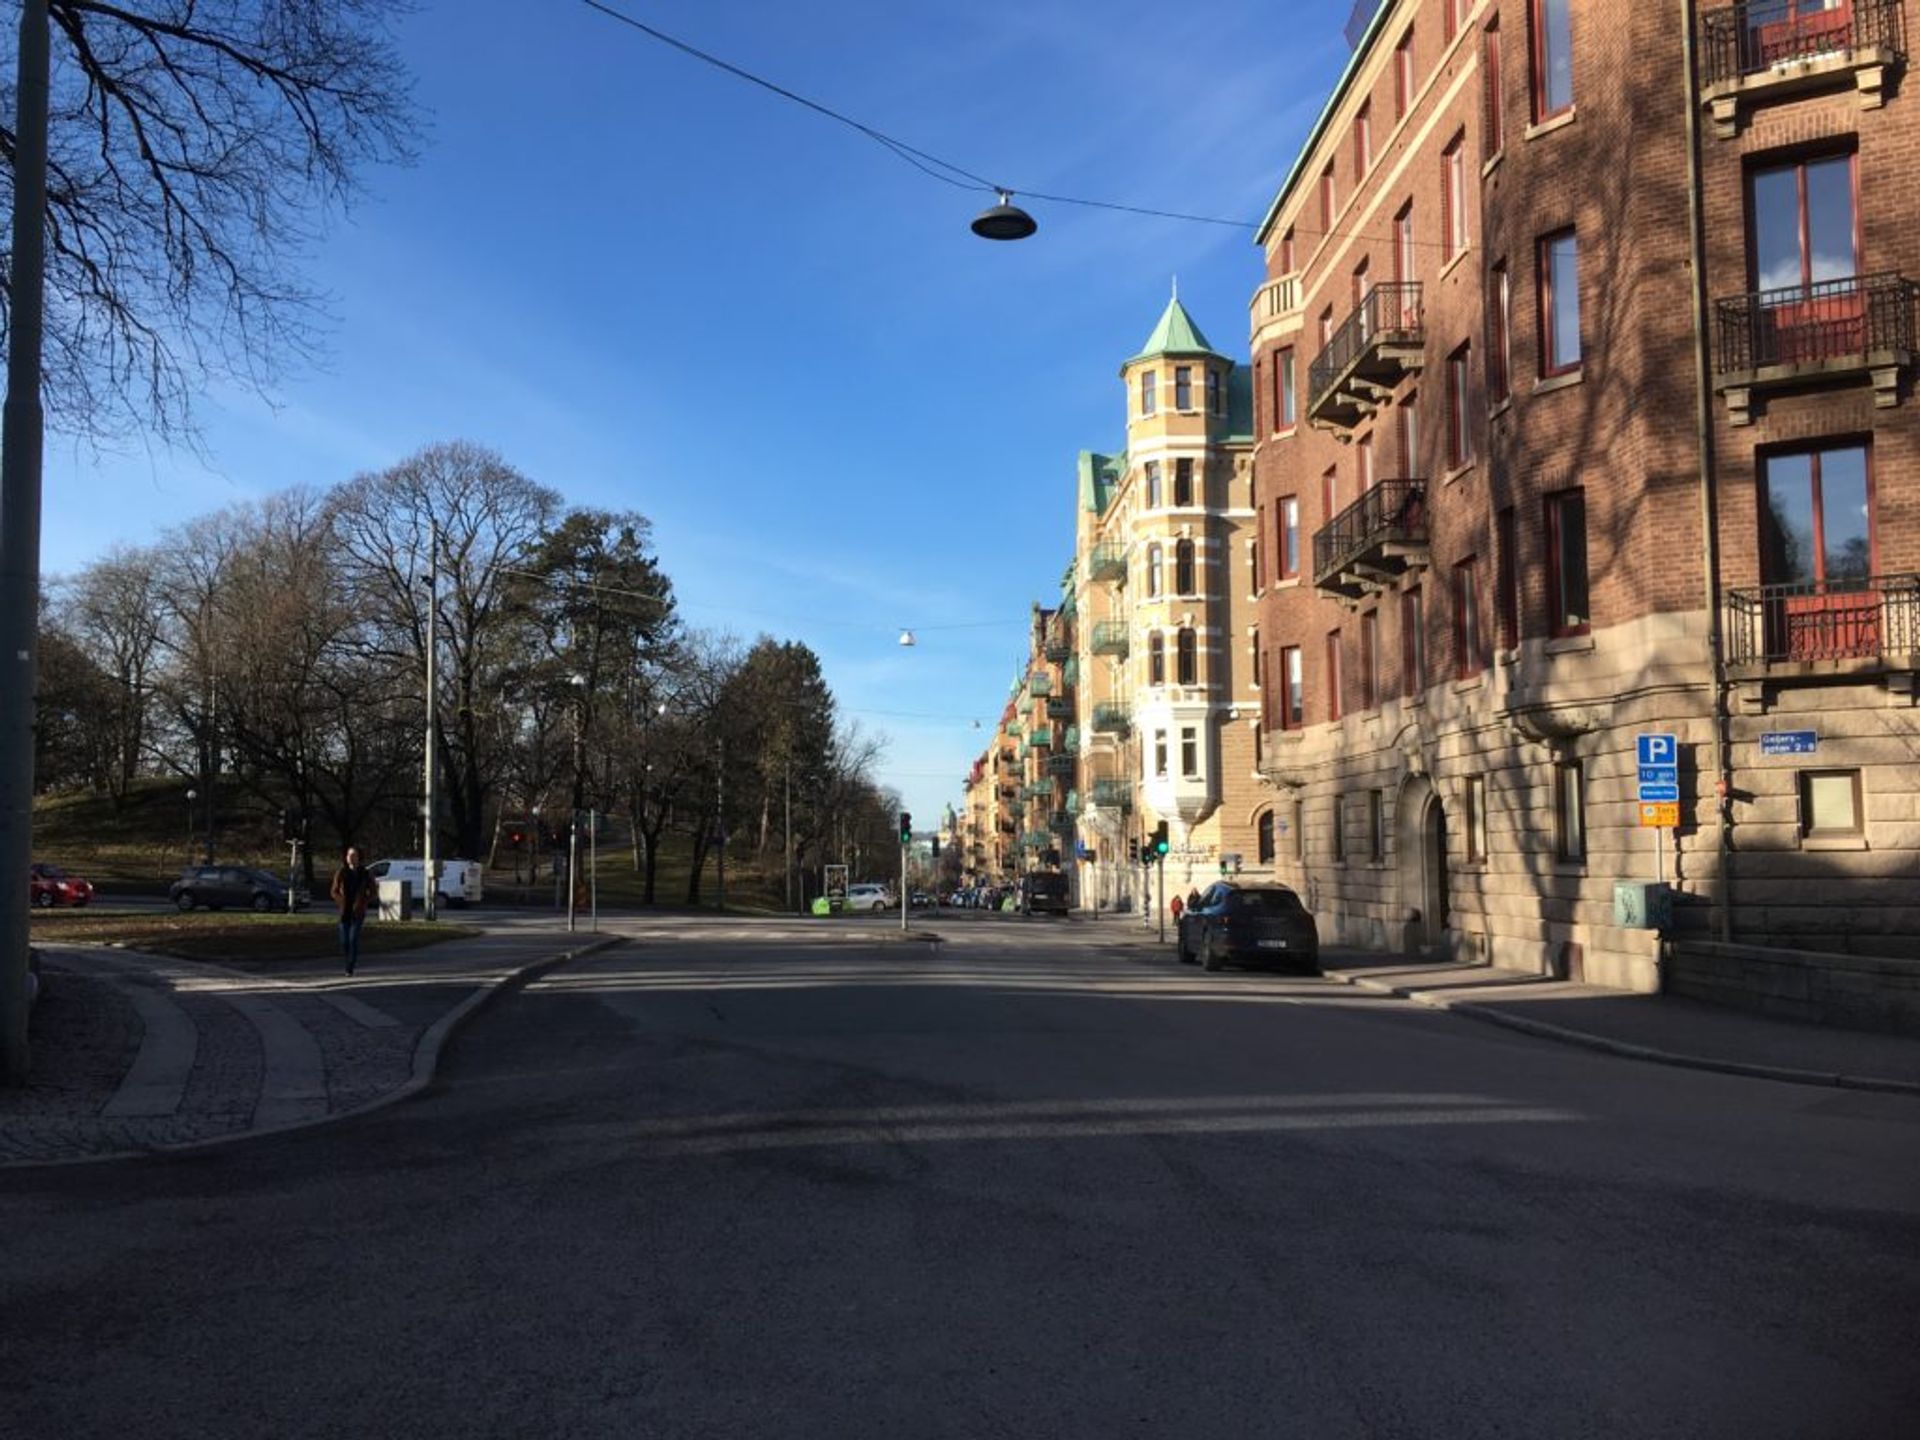 Large buildings in central Gothenburg.